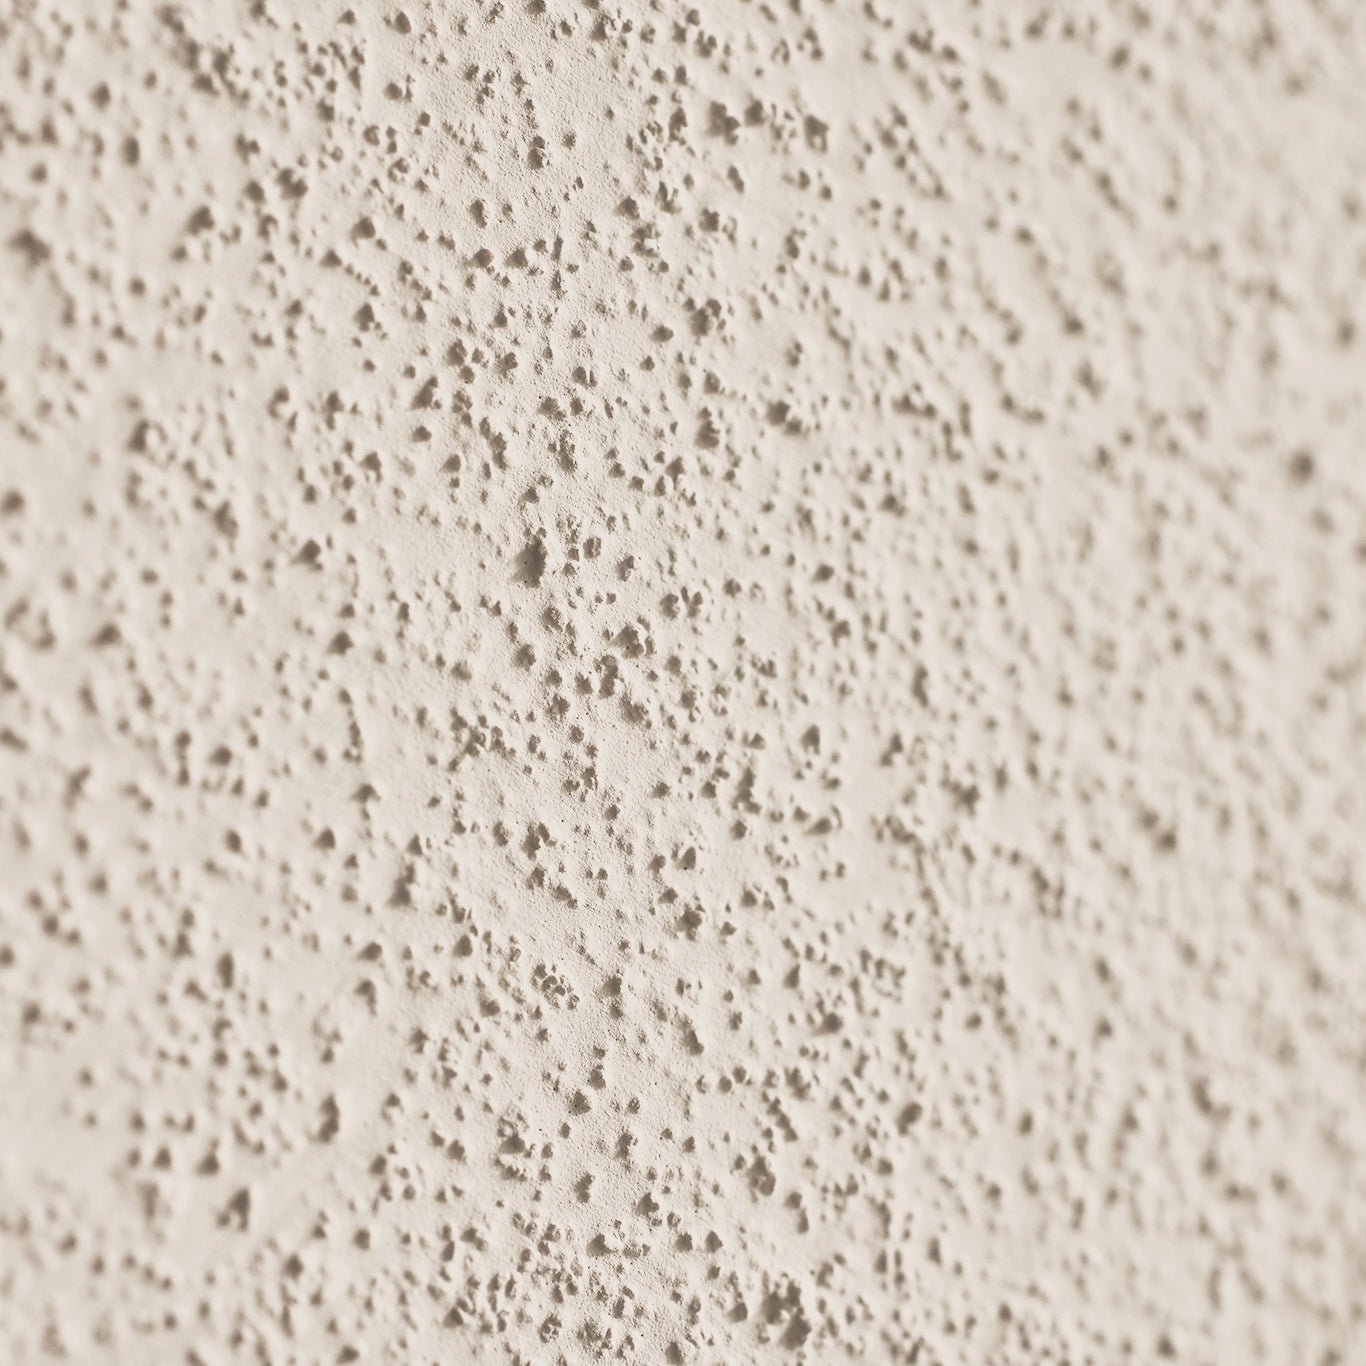 Wheat wall scrub - SHADES by Eric Kuster